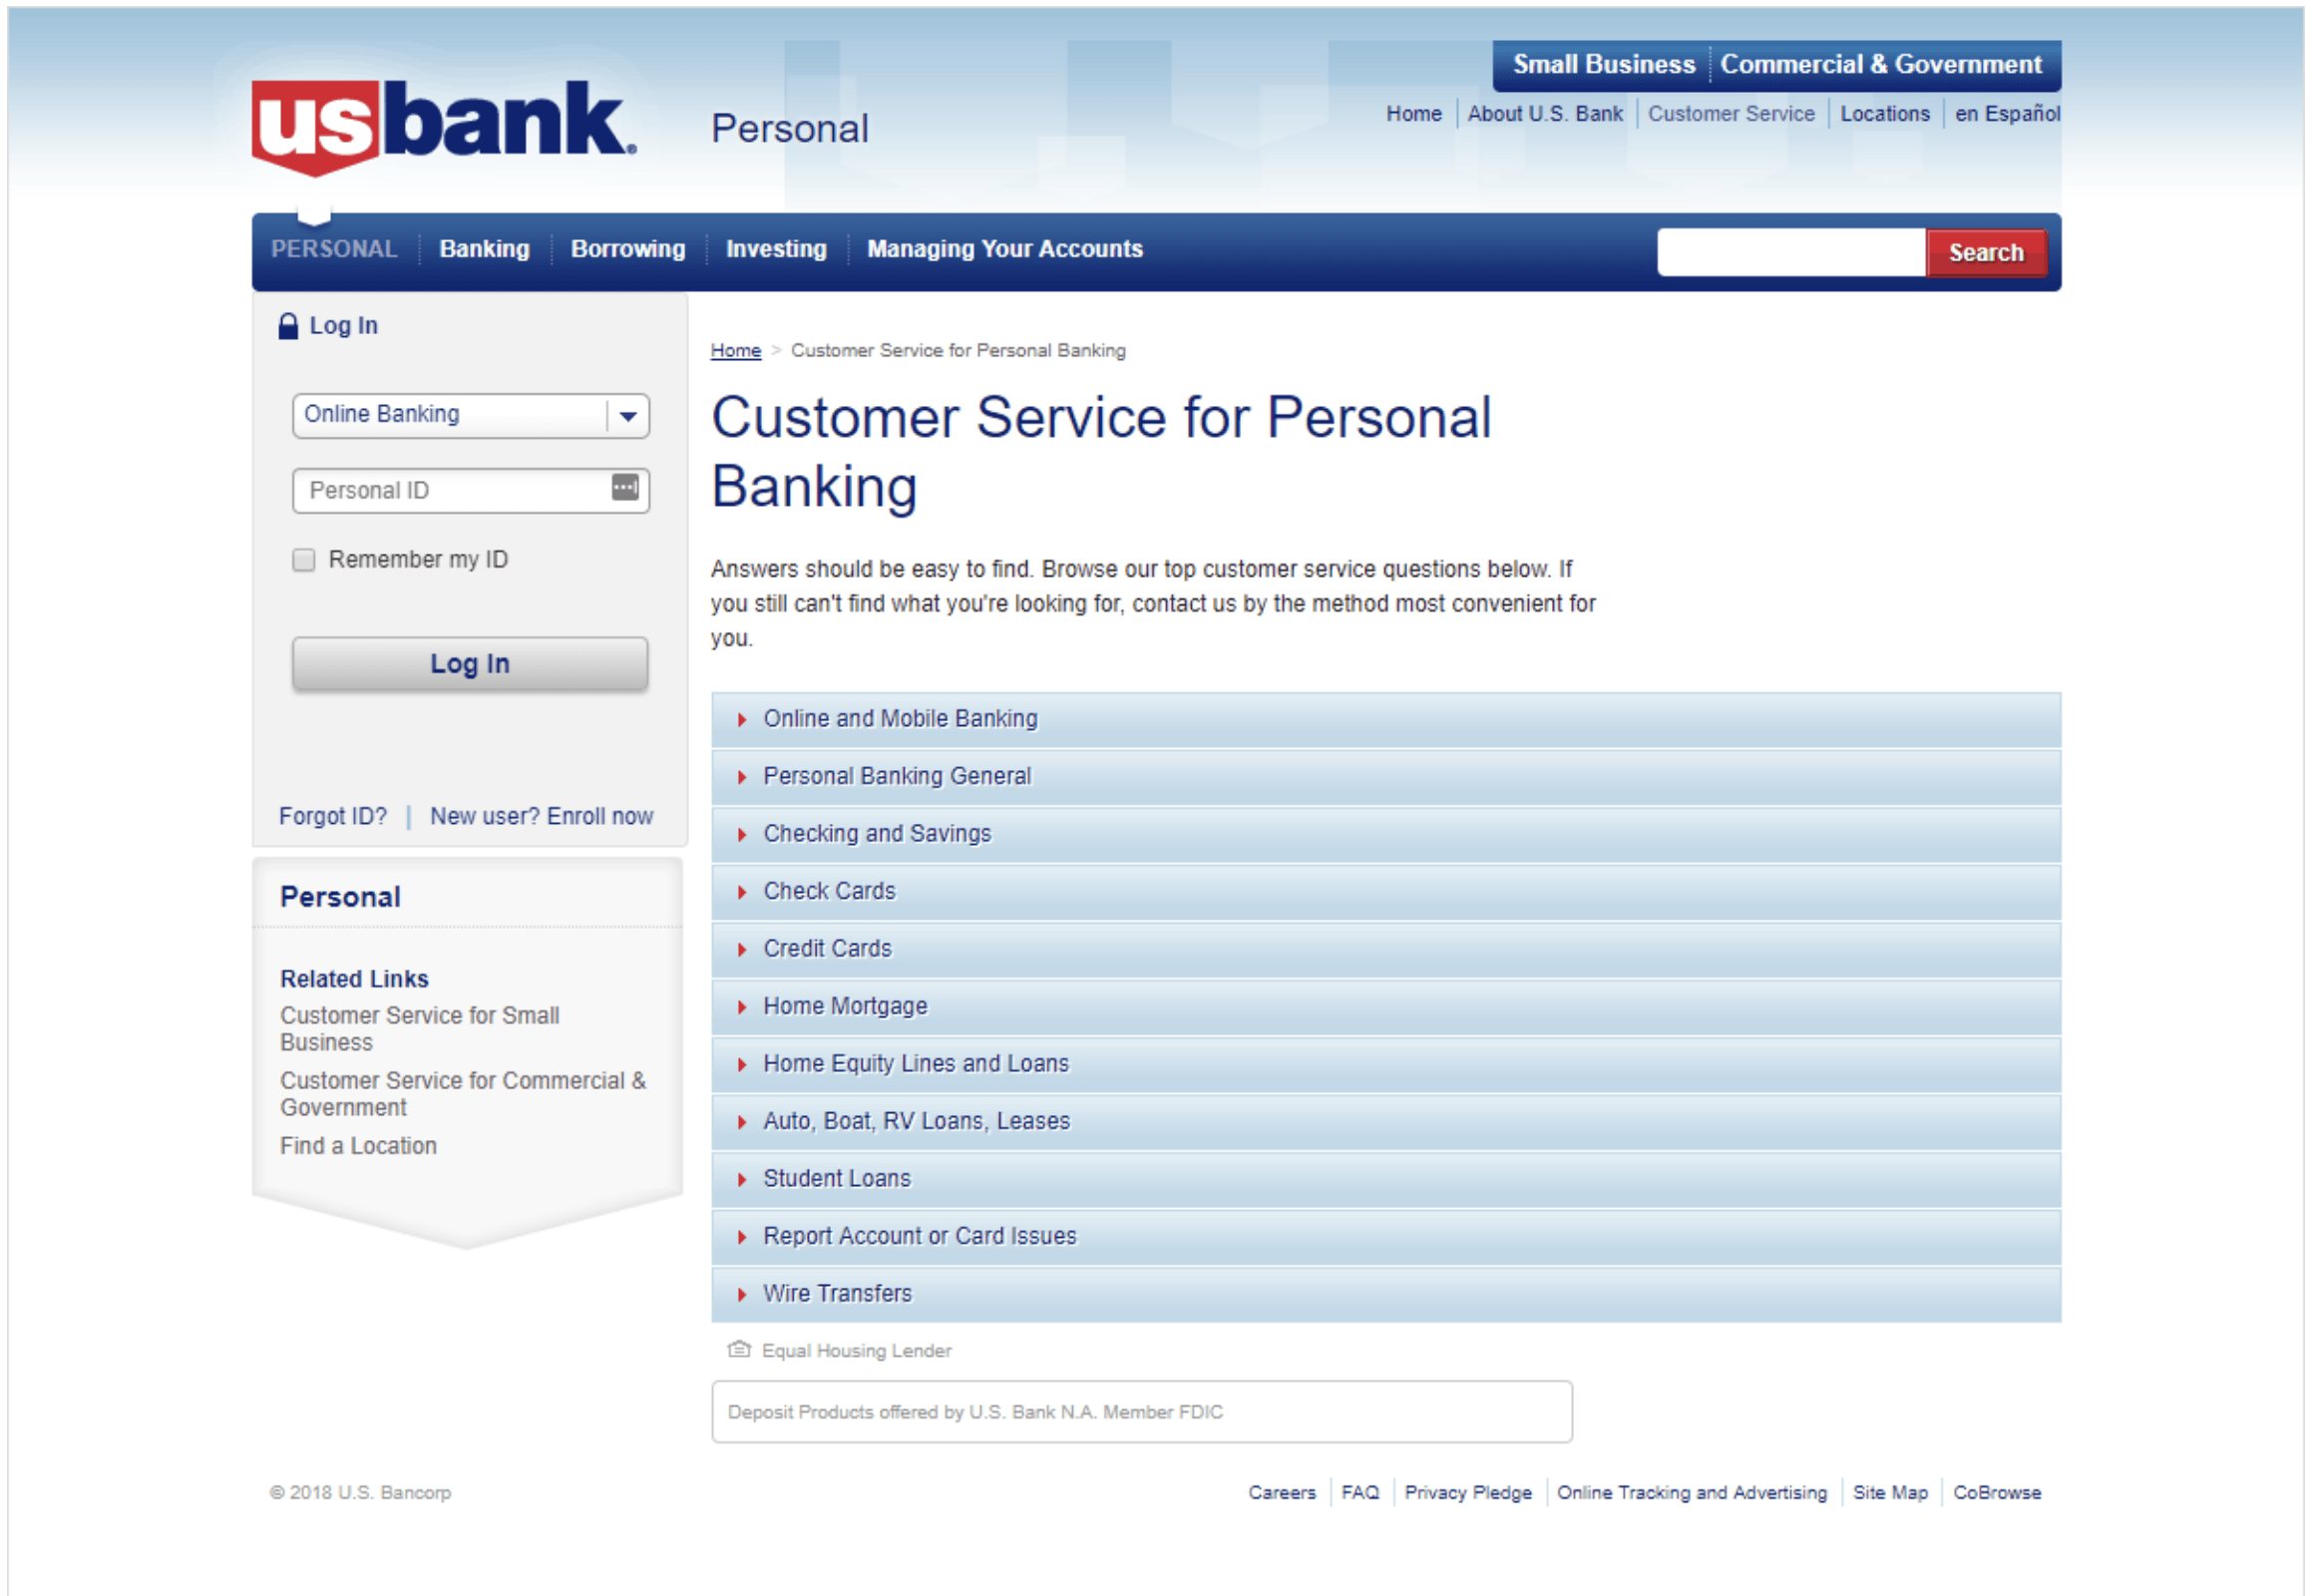 US bank knowledge base